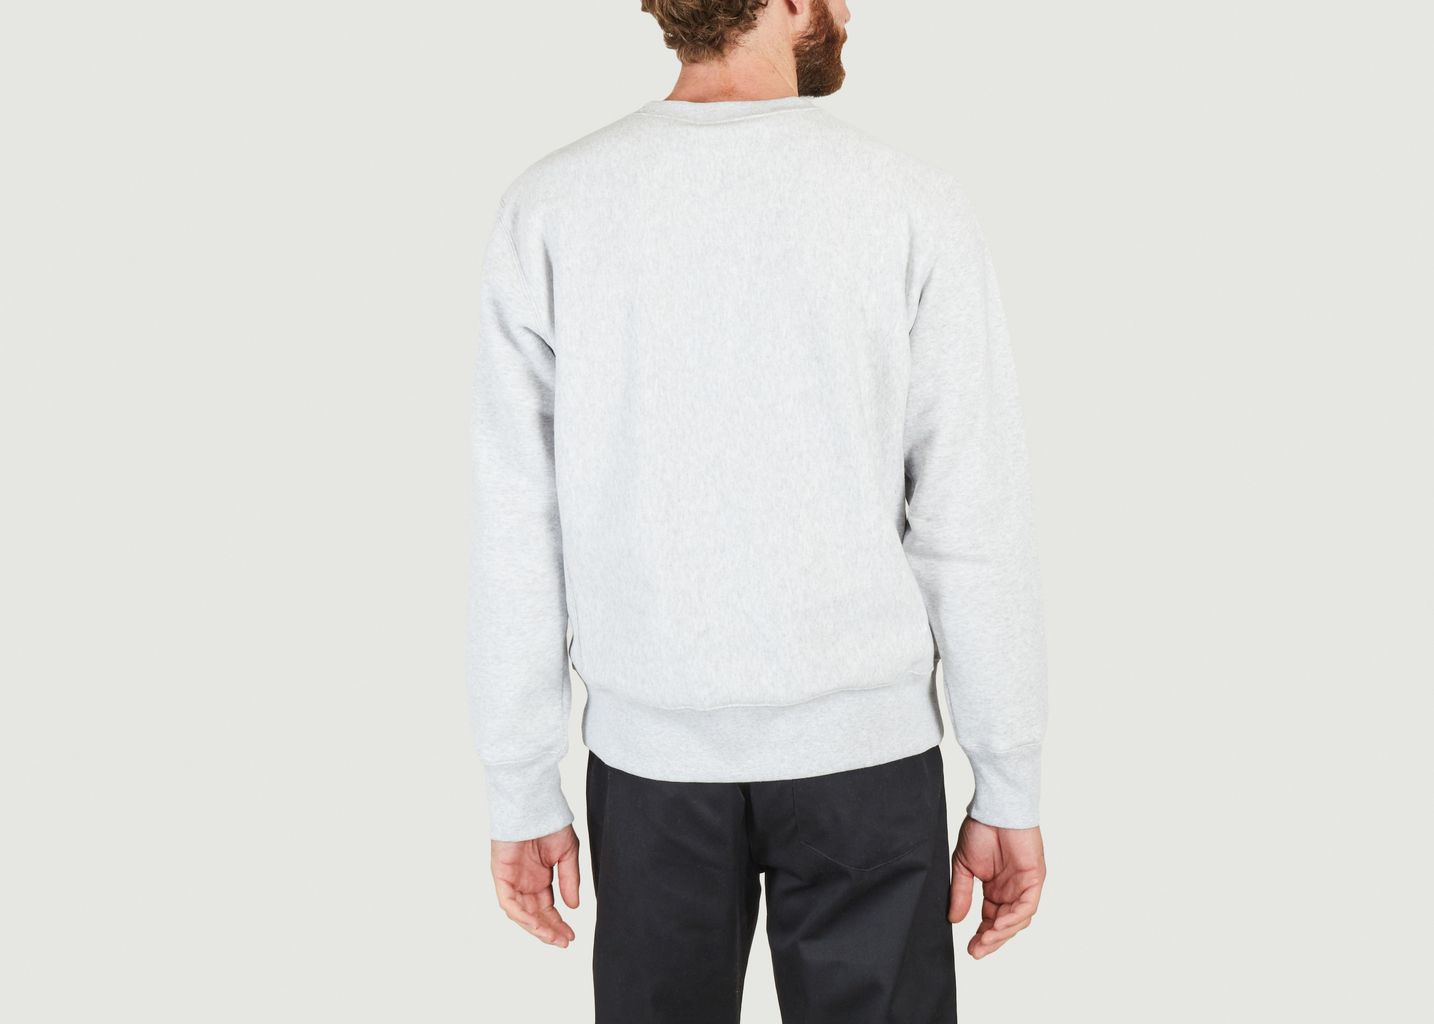 Reverse weave sweatshirt with C logo - Champion